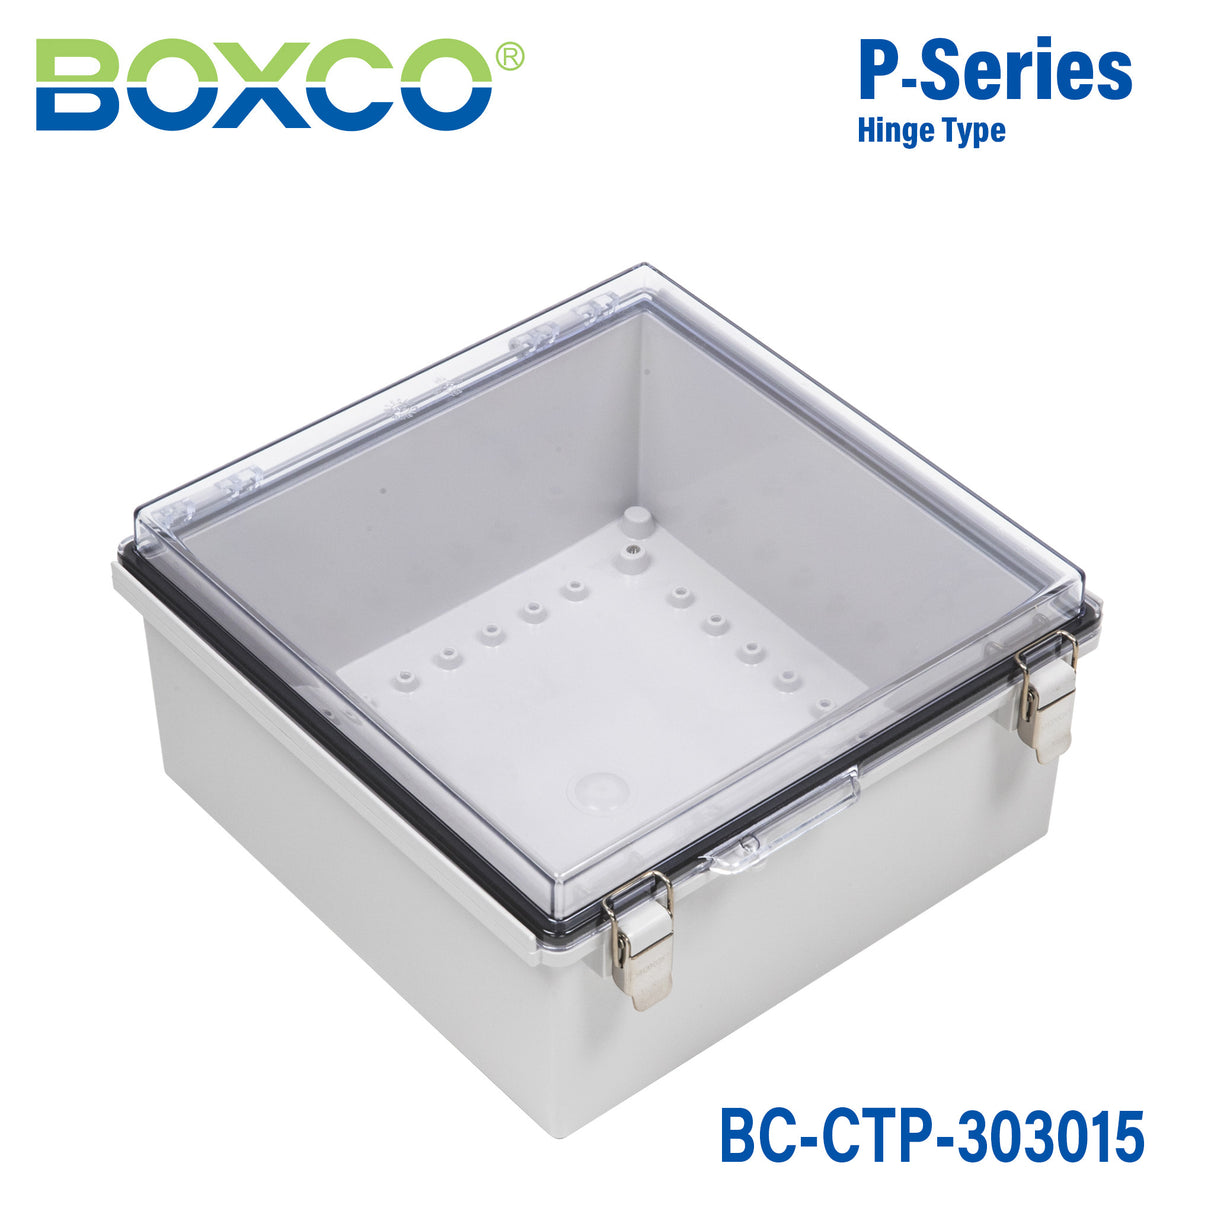 Boxco P-Series 300x300x150mm Plastic Enclosure, IP67, IK08, PC, Transparent Cover, Molded Hinge and Latch Type